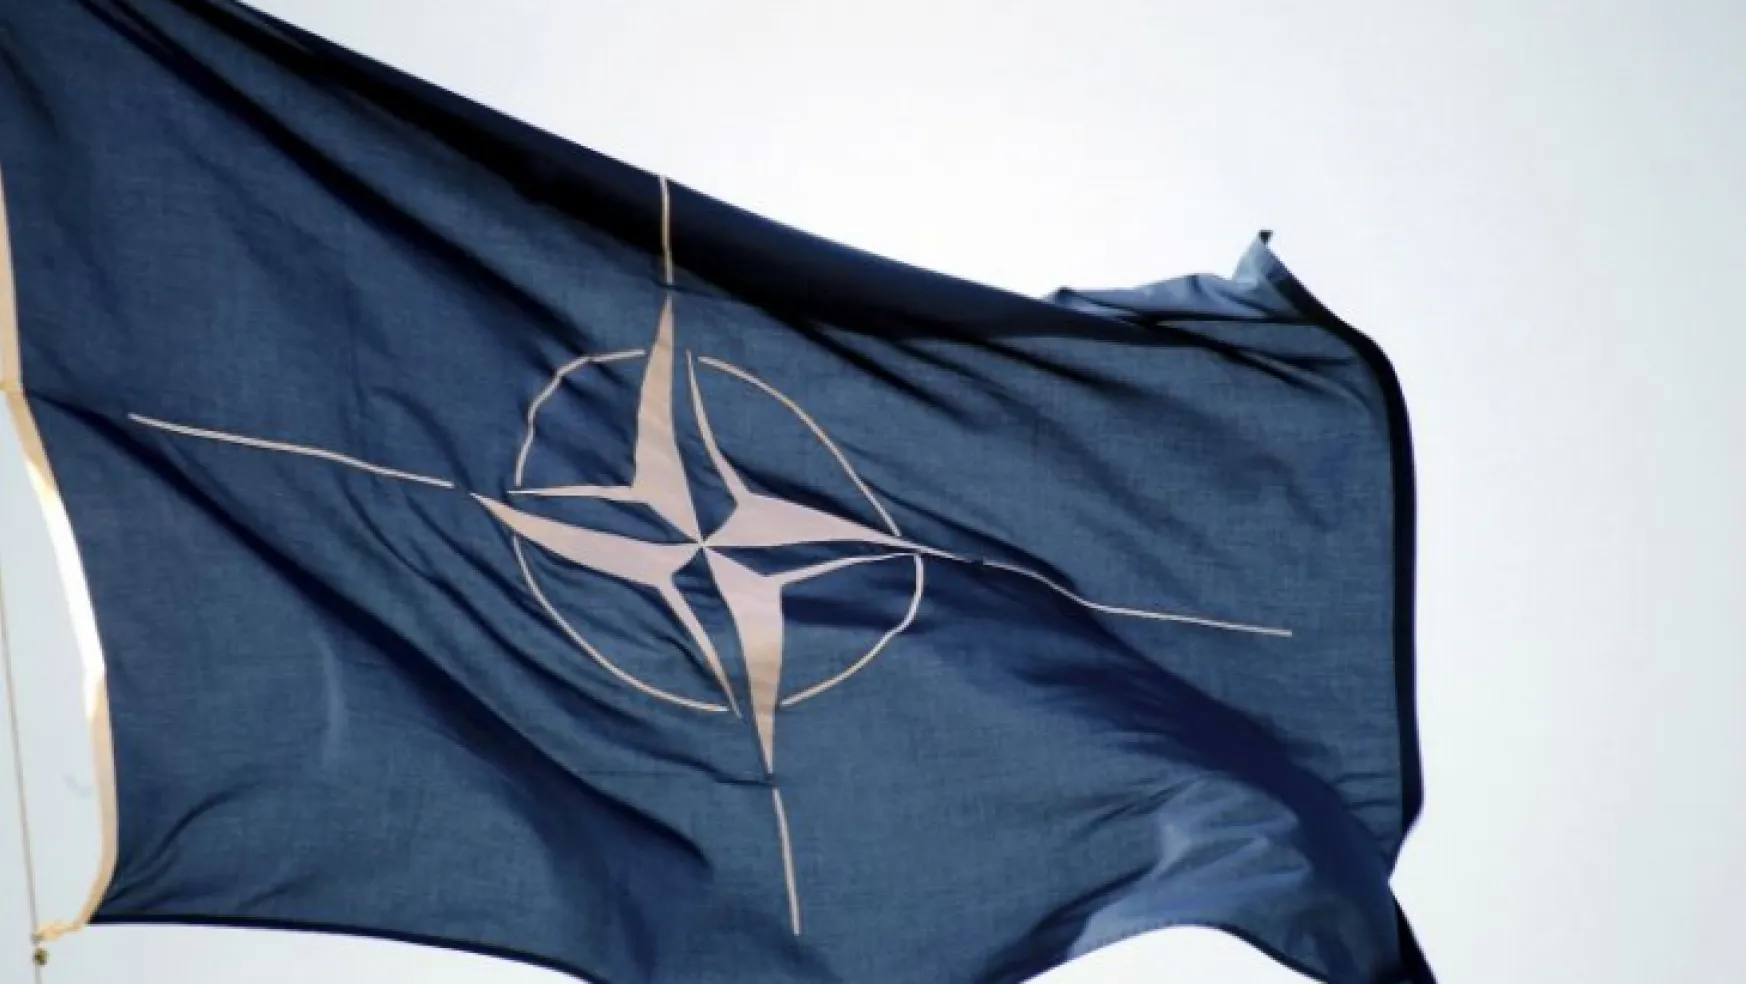 Finlandiya'nın NATO'ya katılımı komisyonda kabul edildi